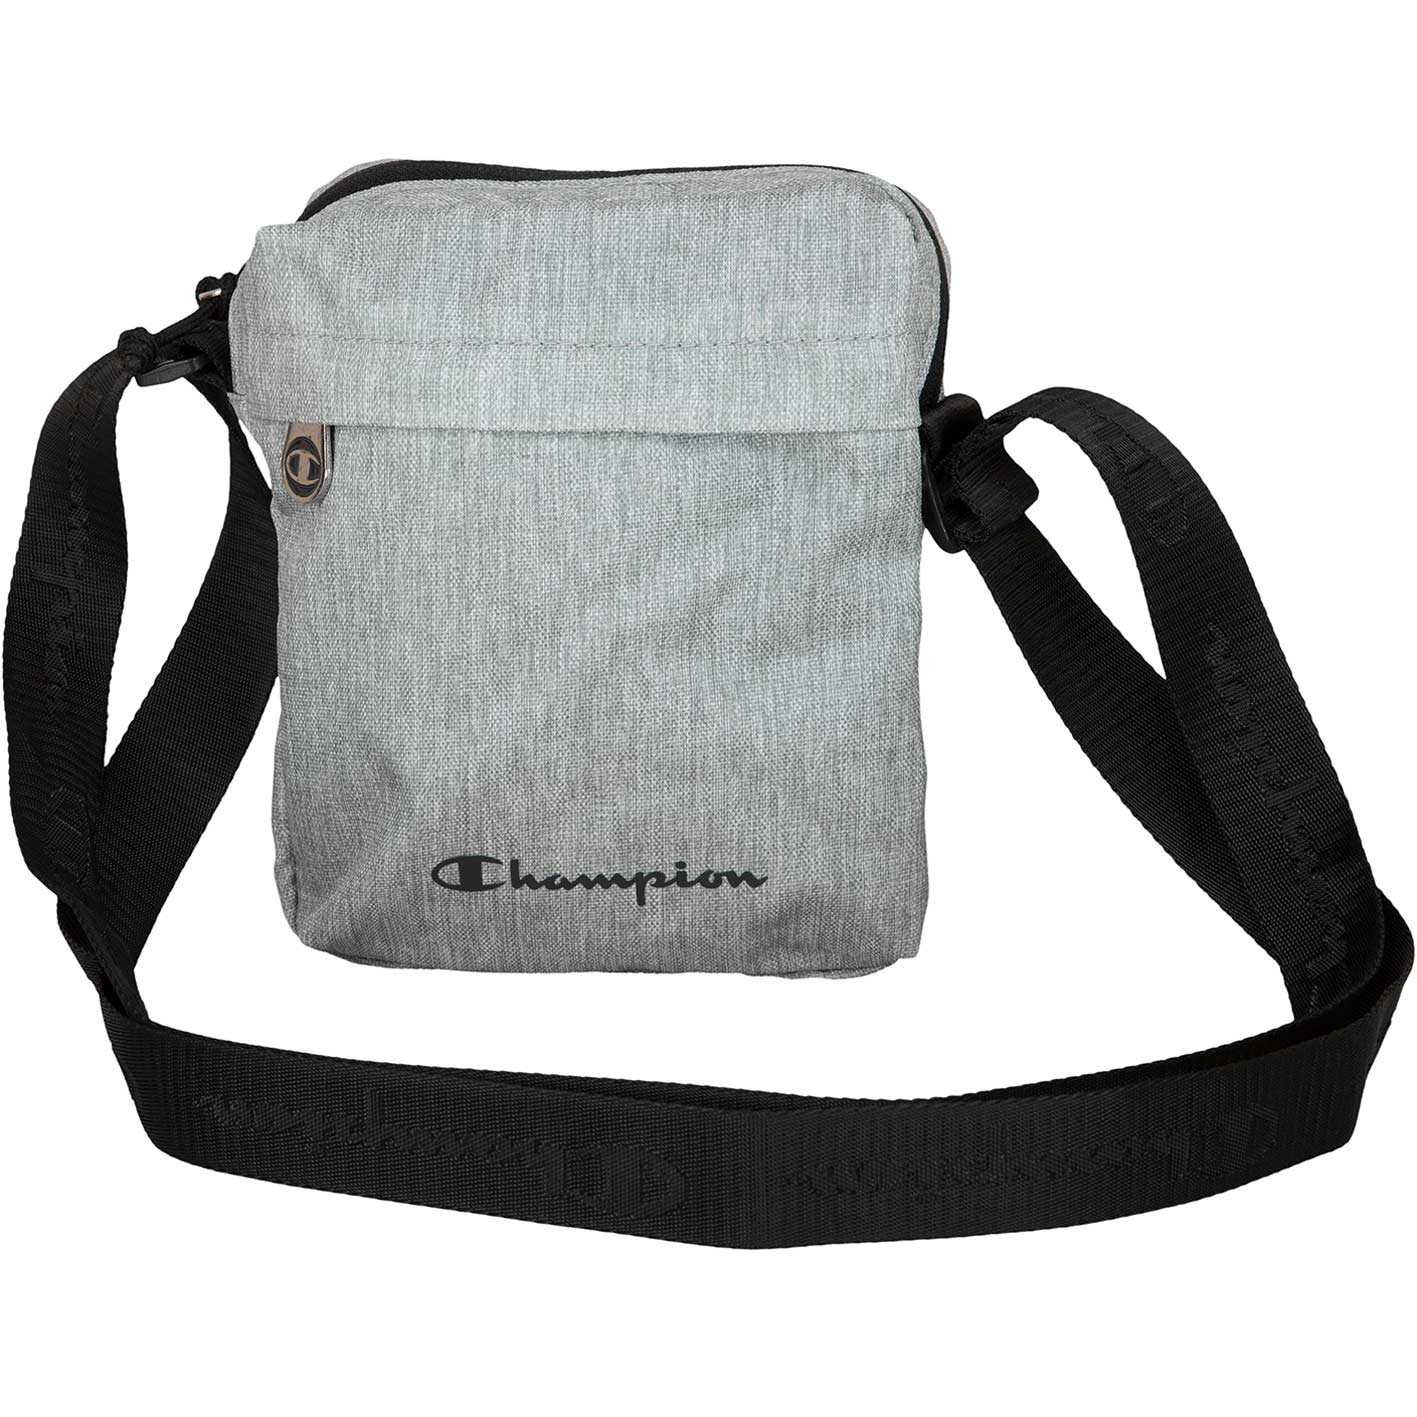 ☆ Champion Mini Tasche Small Shoulder Bag grau - hier bestellen!